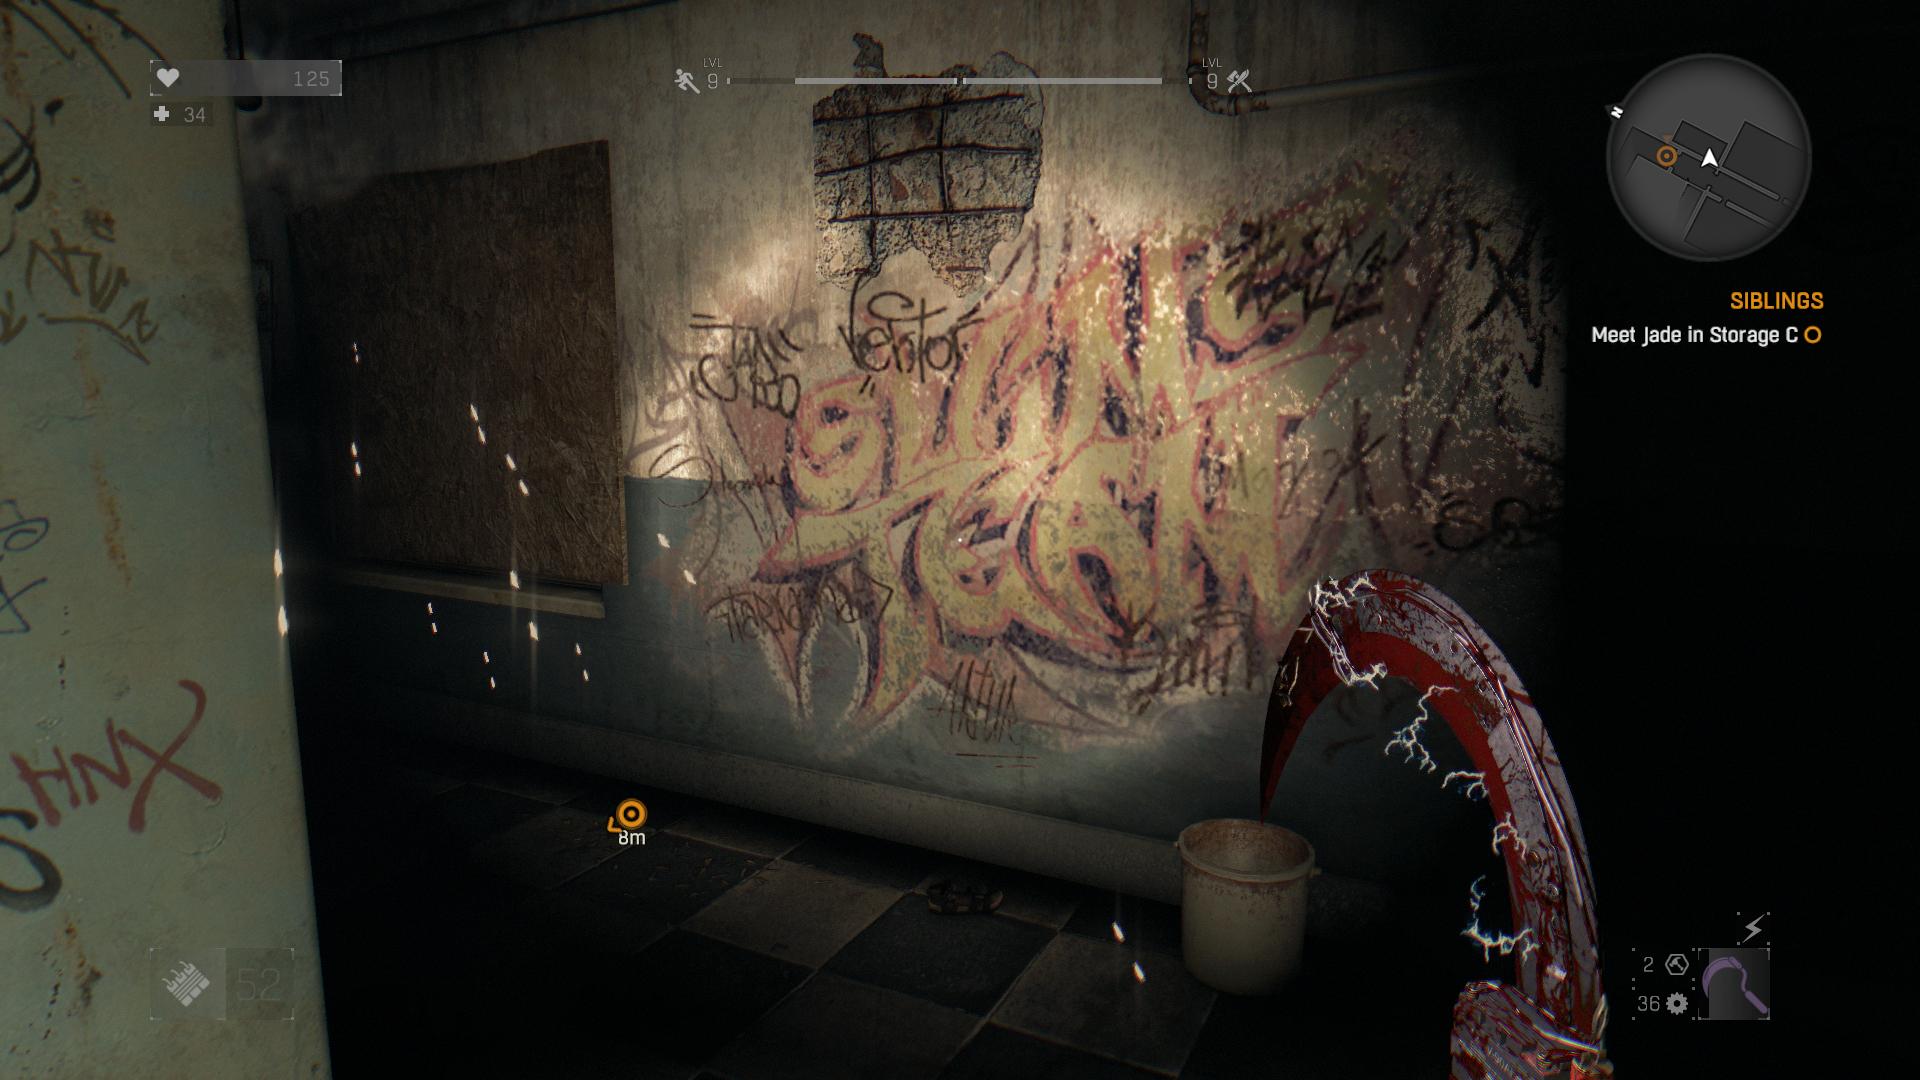 Good Job With The Graffiti, Dying Light